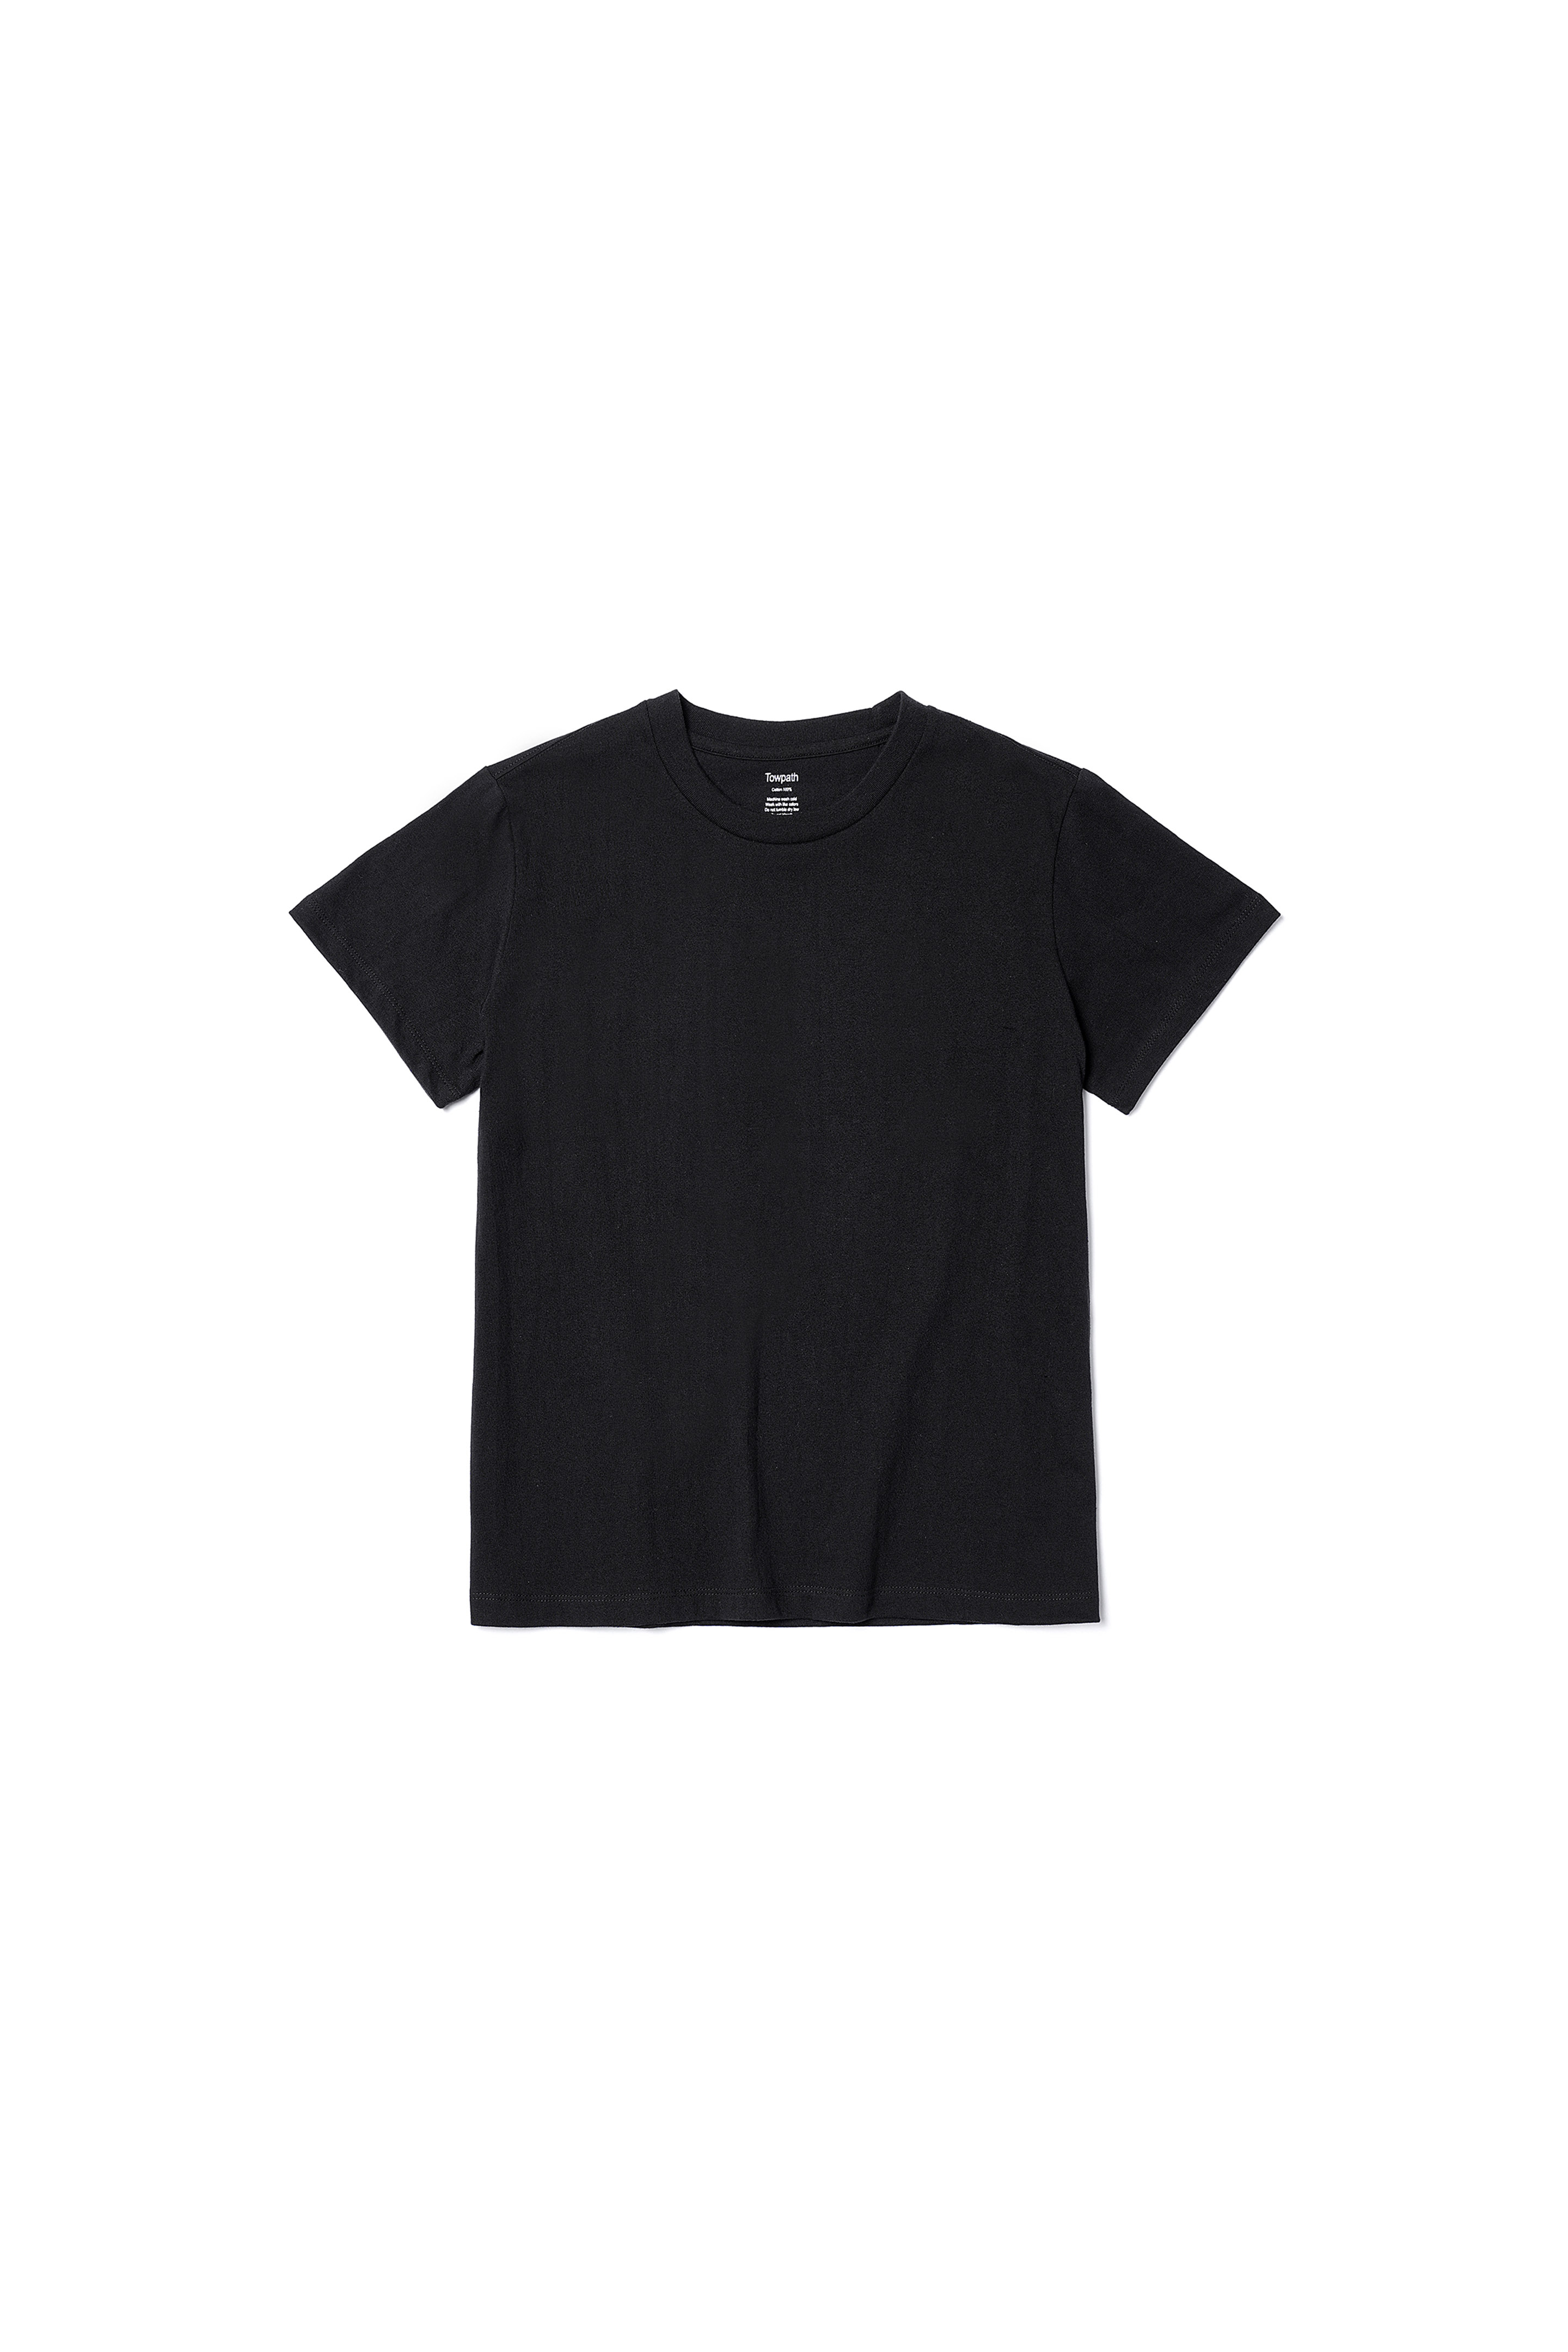 Towpath 002 Crew-neck T-shirt (Black)